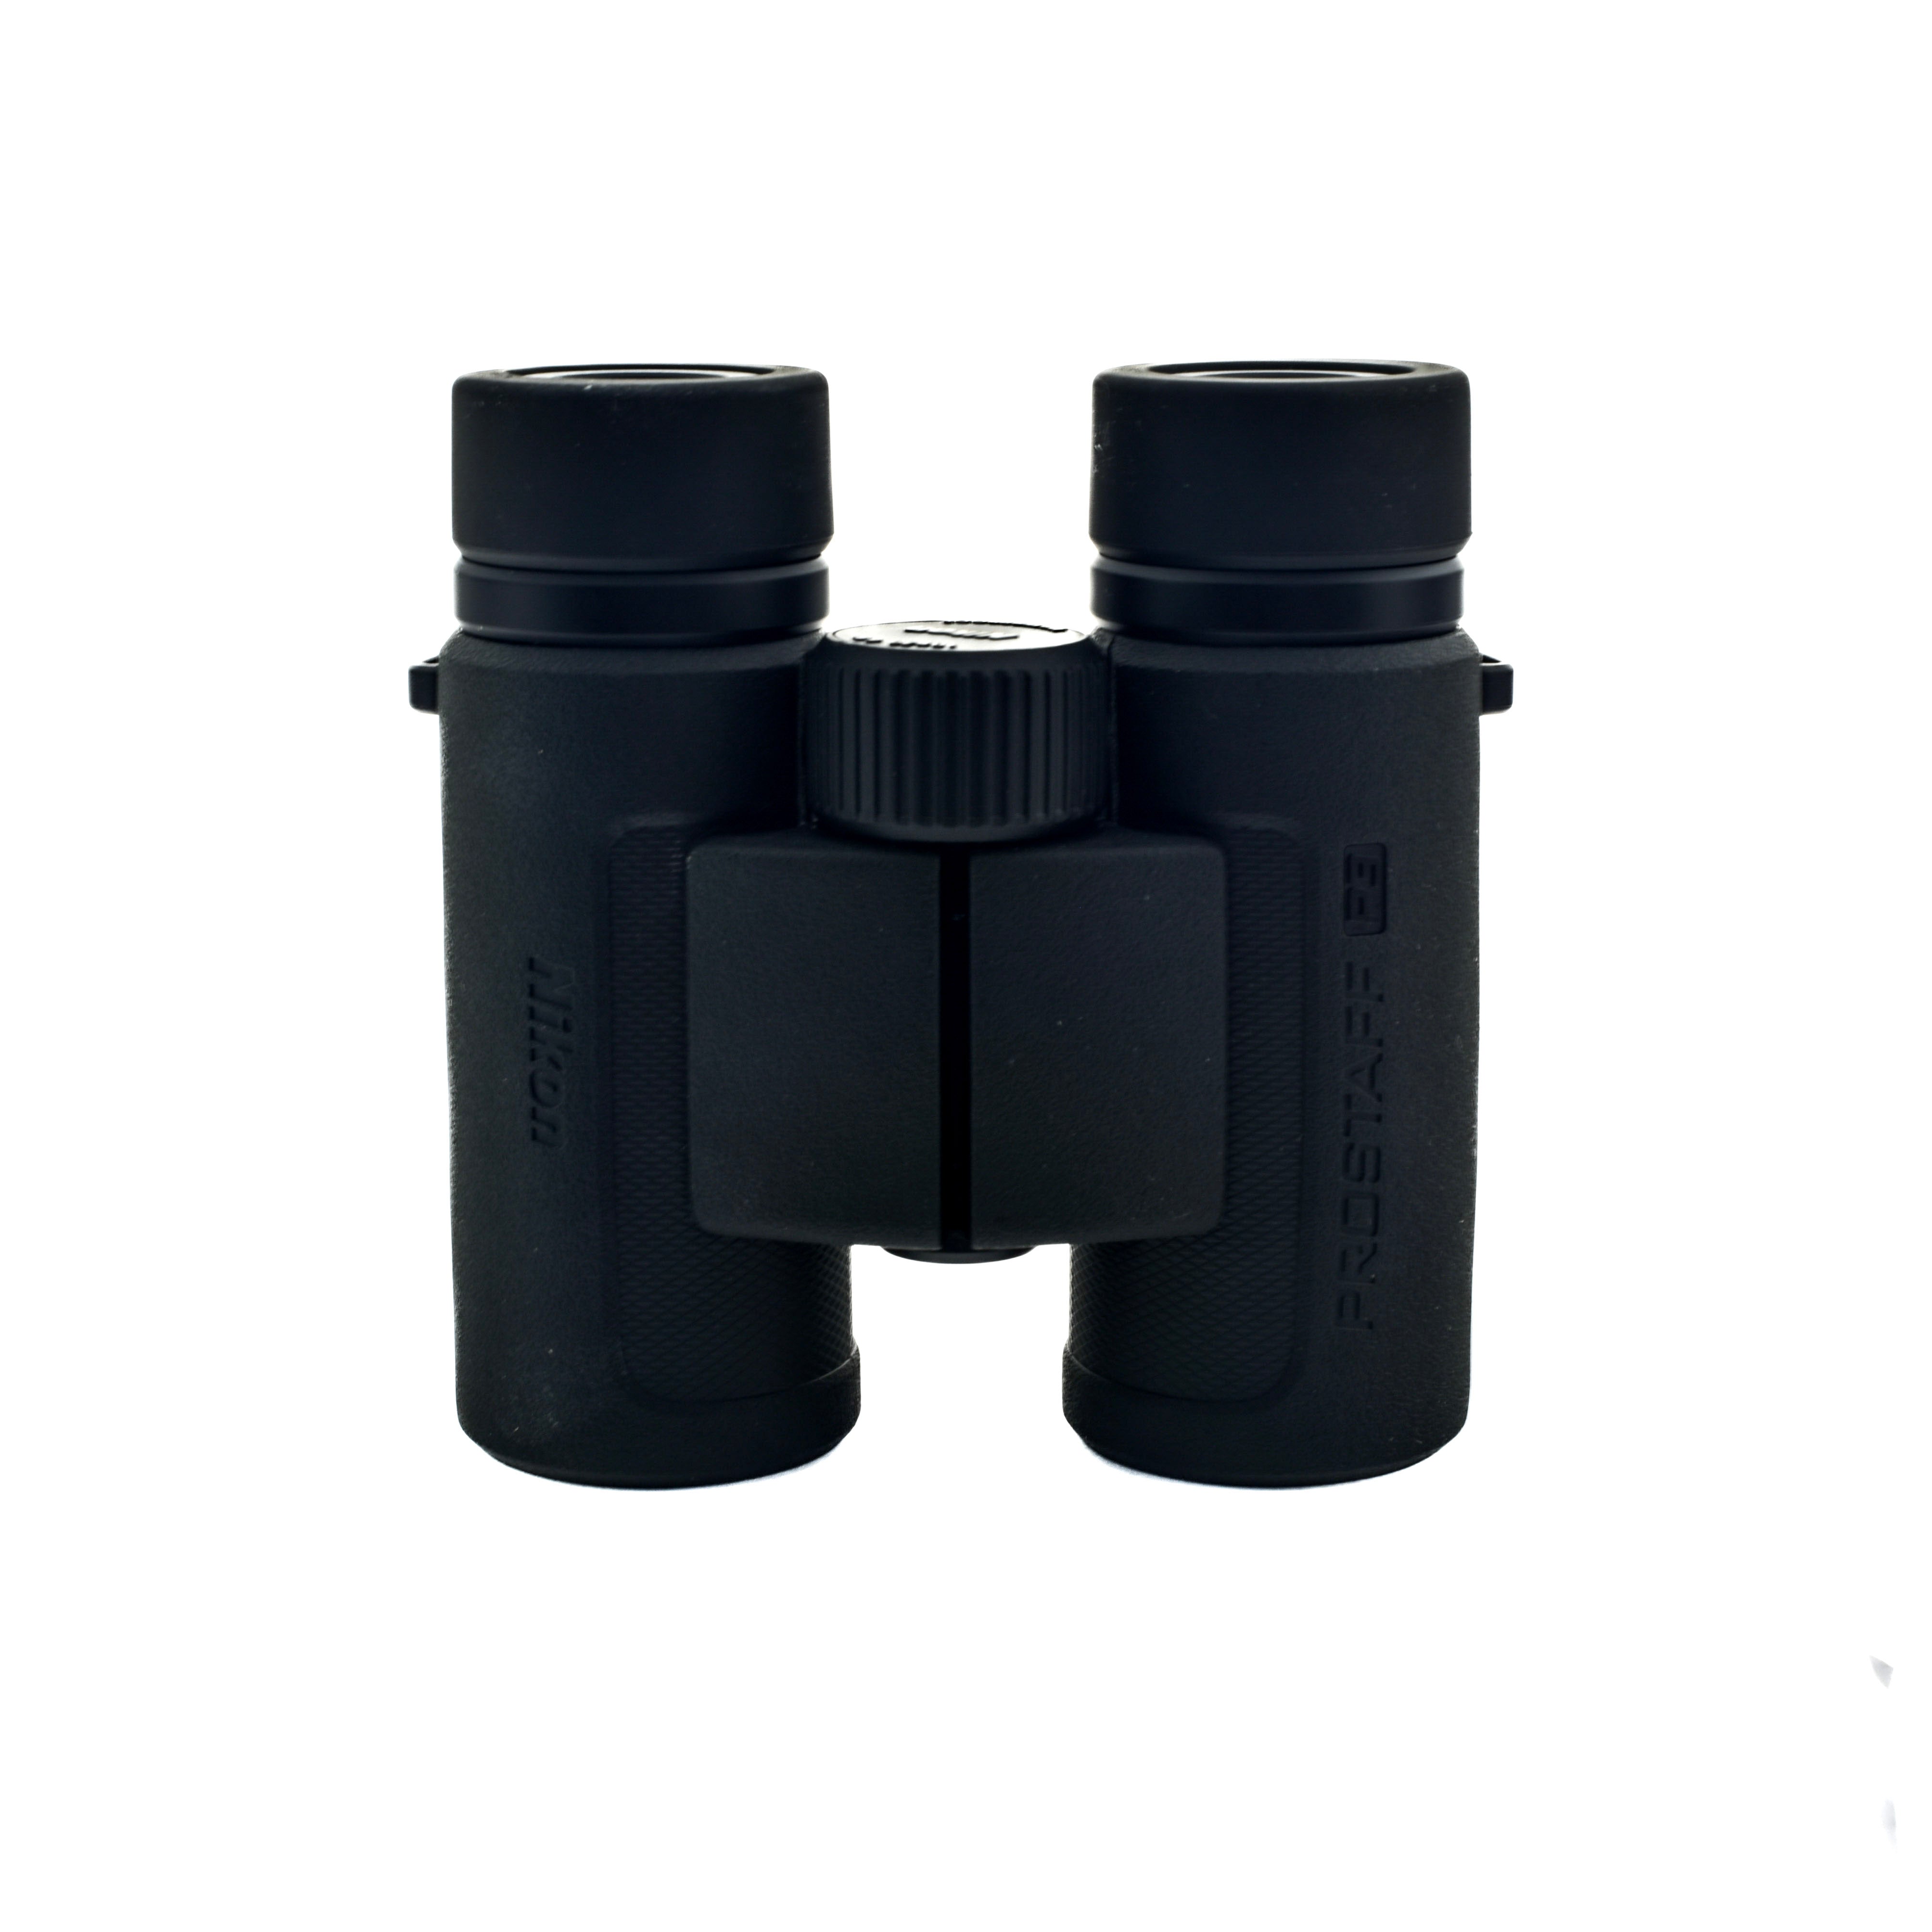 Nikon Prostaff P3 8x30 WP Binoculars (Black)